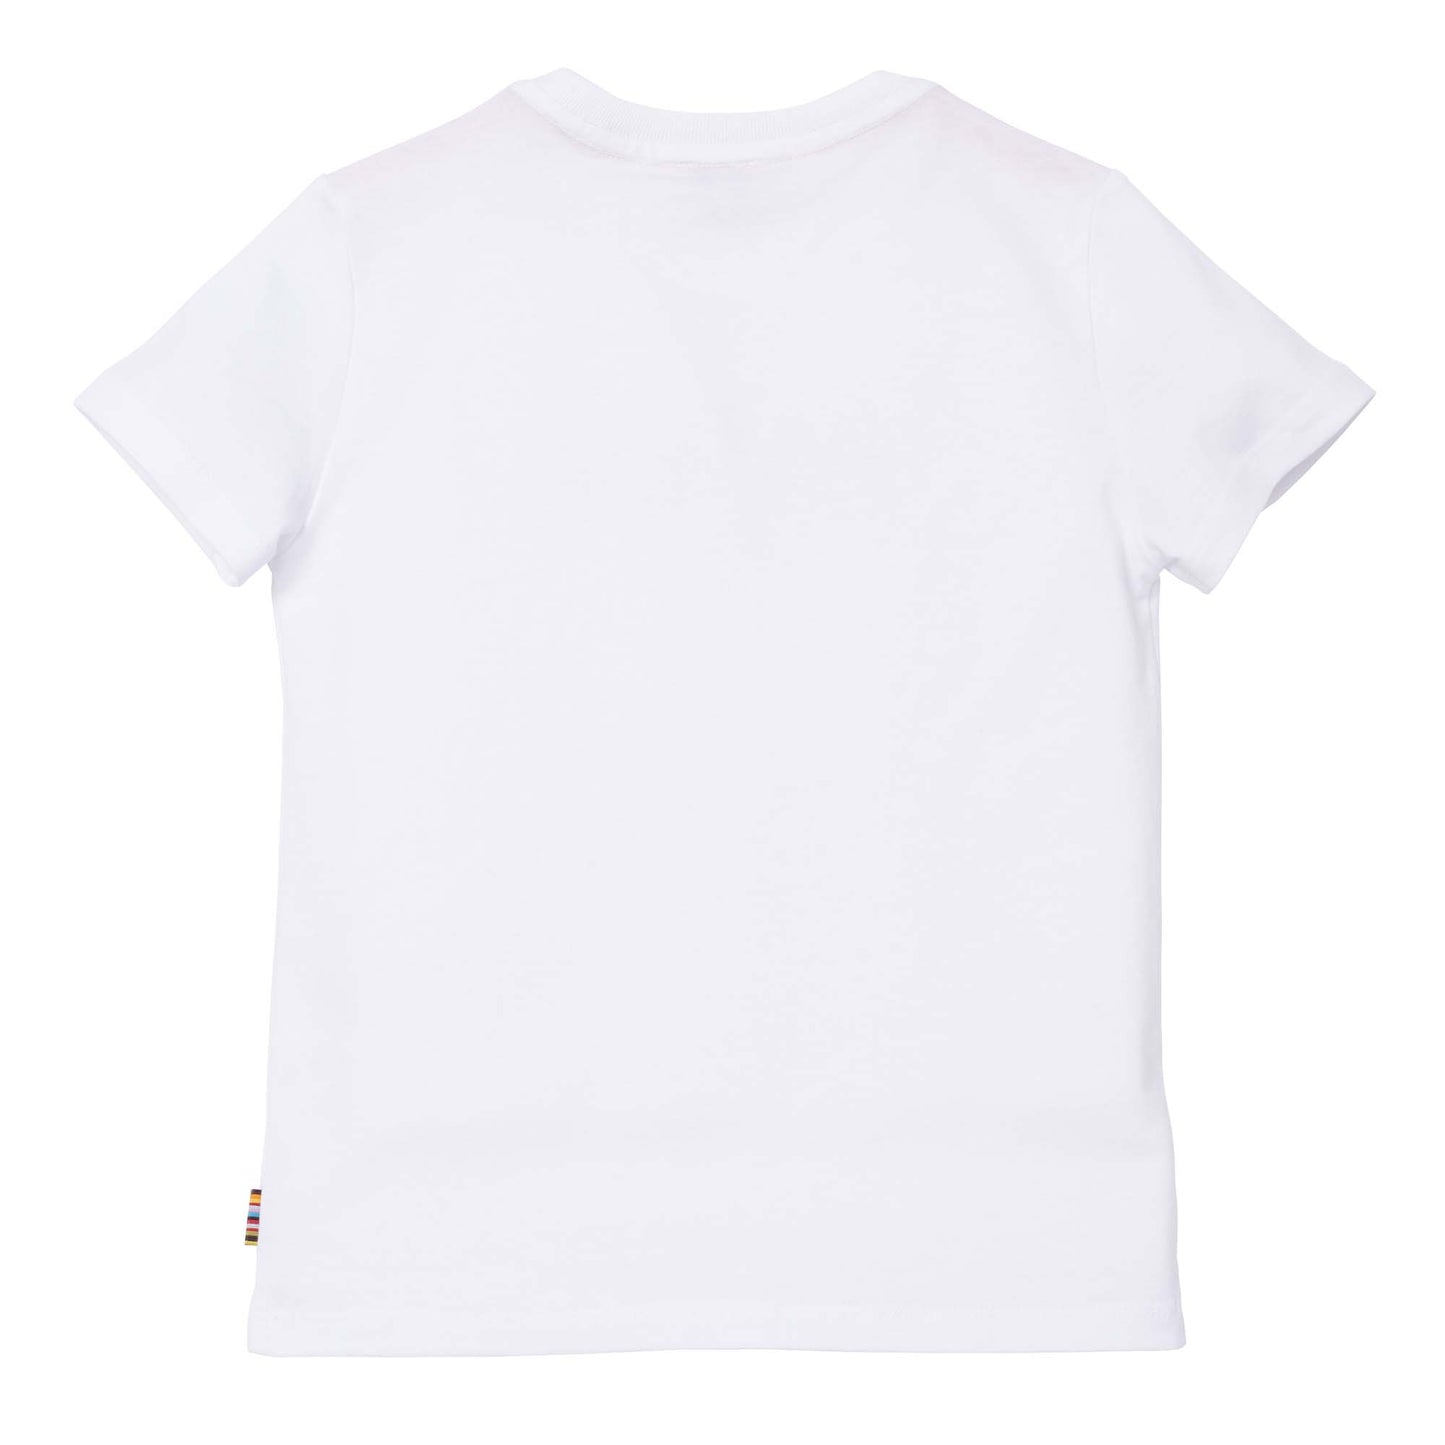 Paul Smith Jr Boys s/s T-Shirt_White P25718